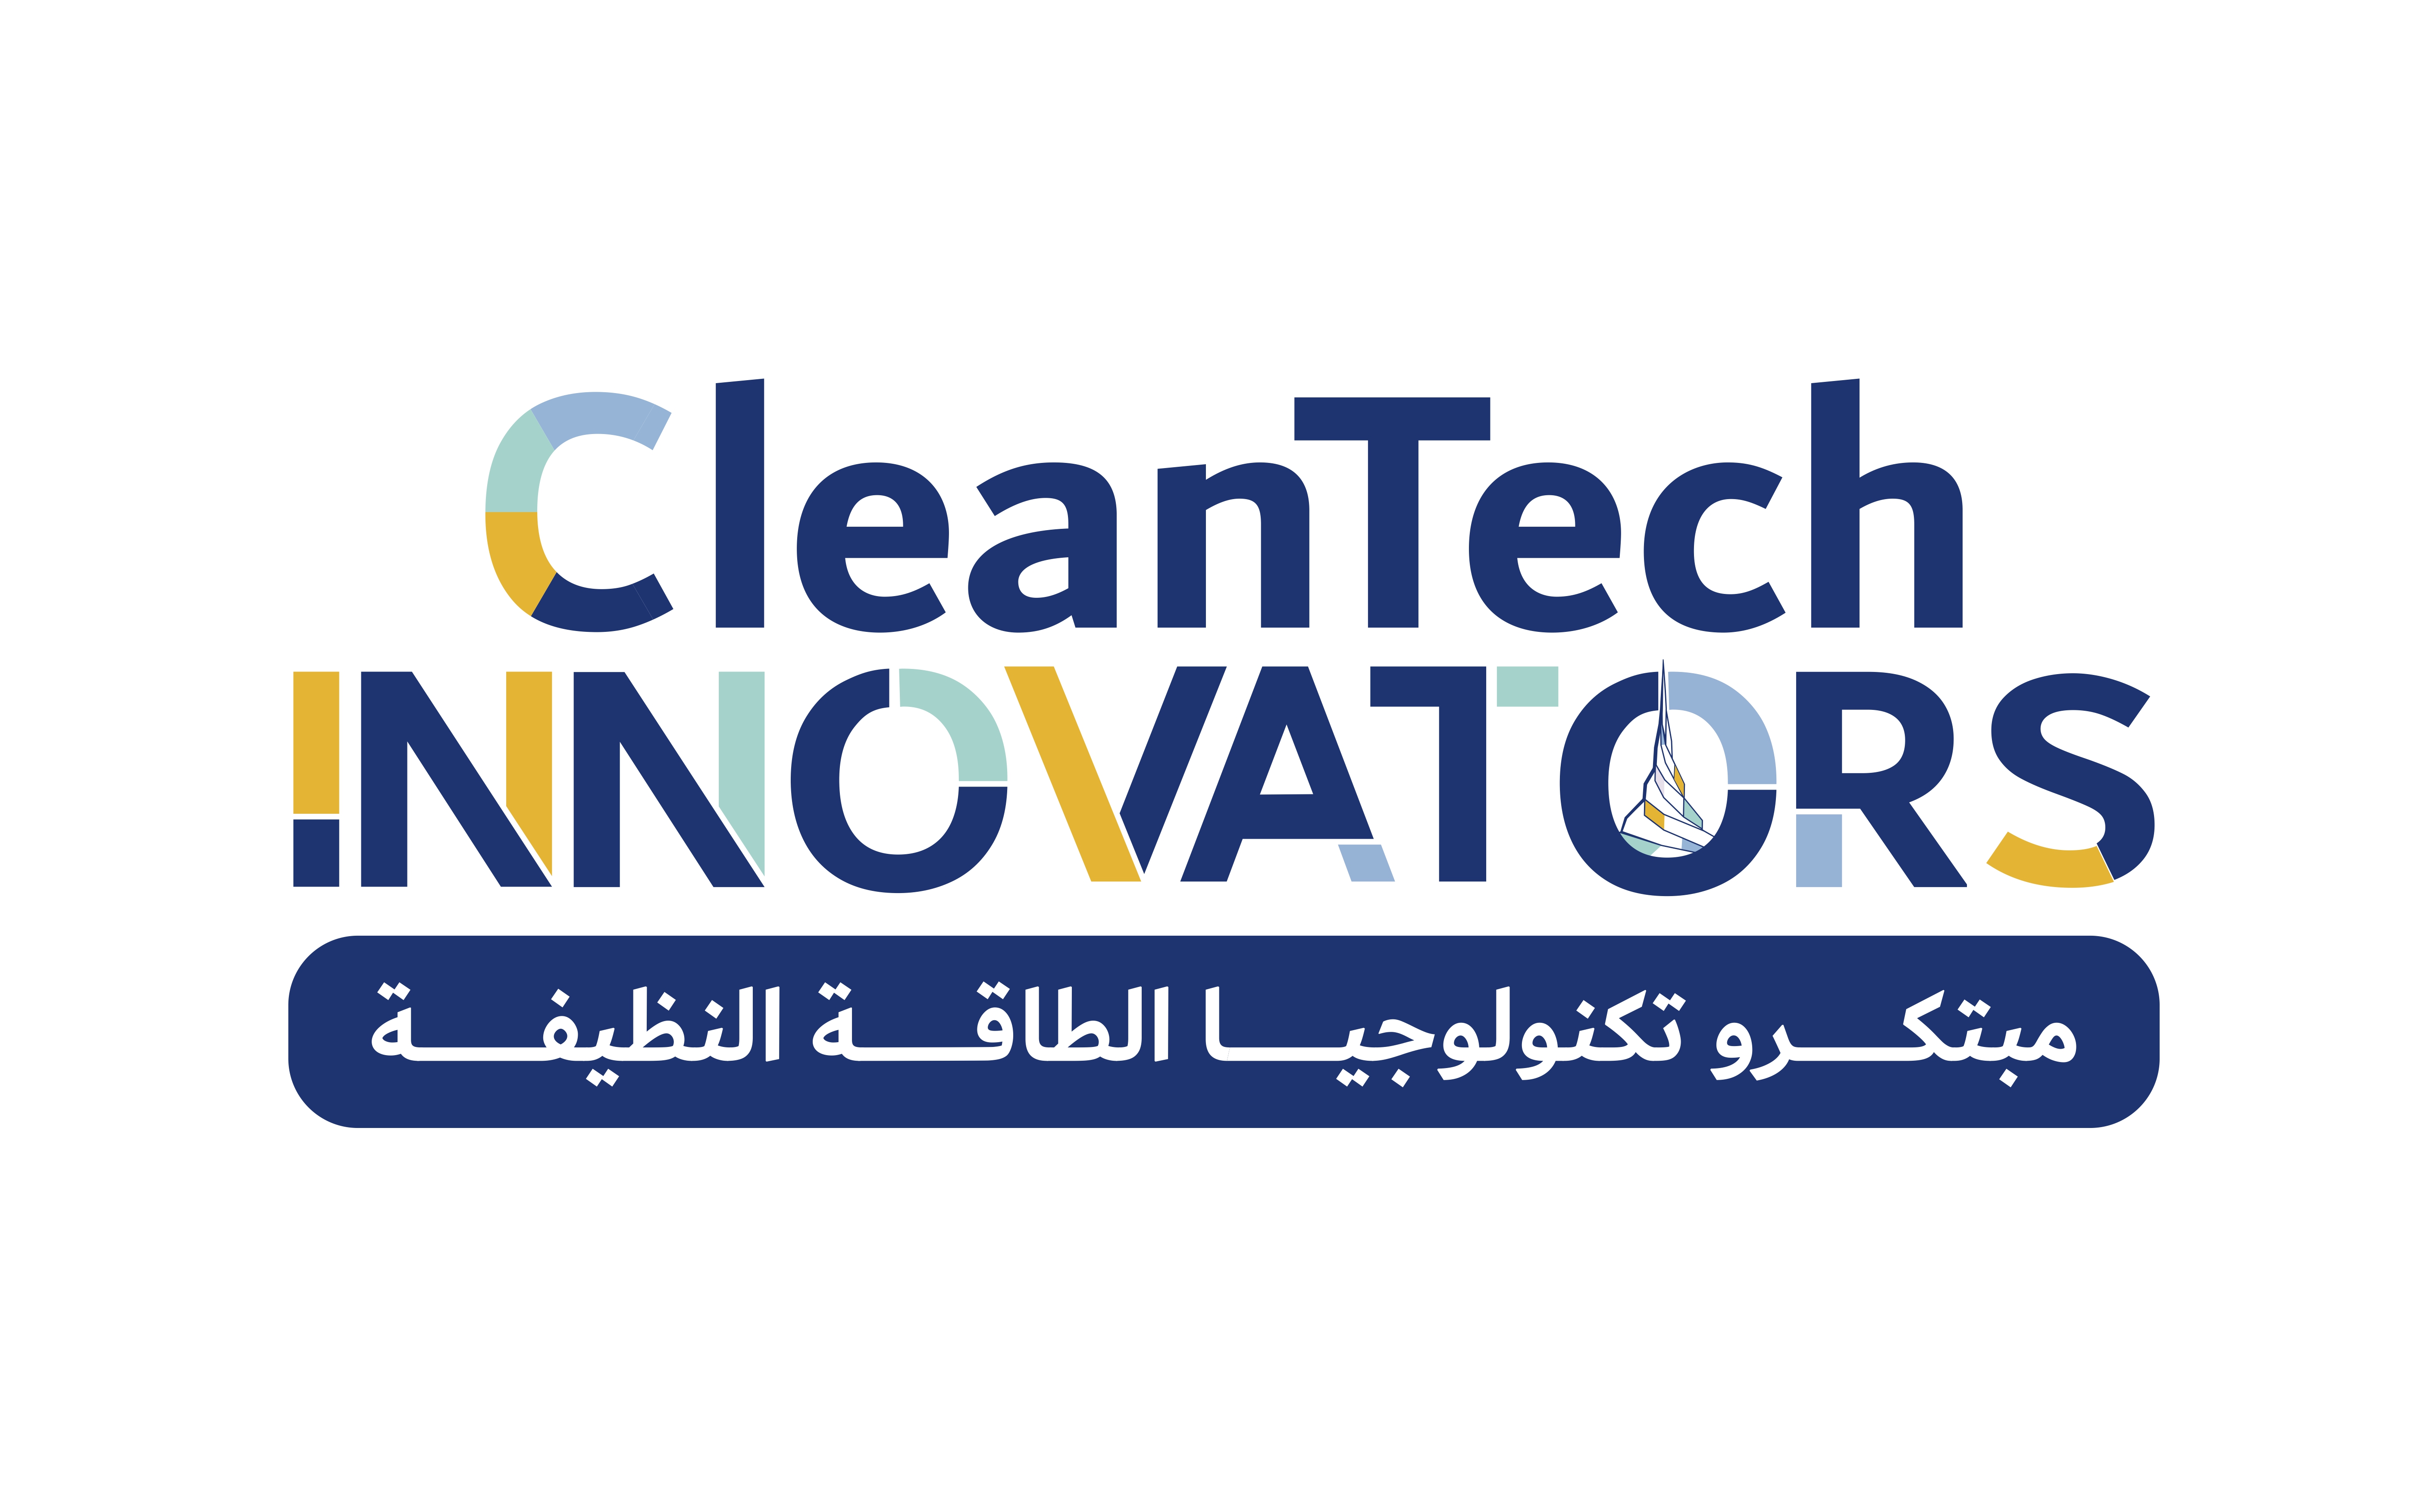 CleanTech Innovators